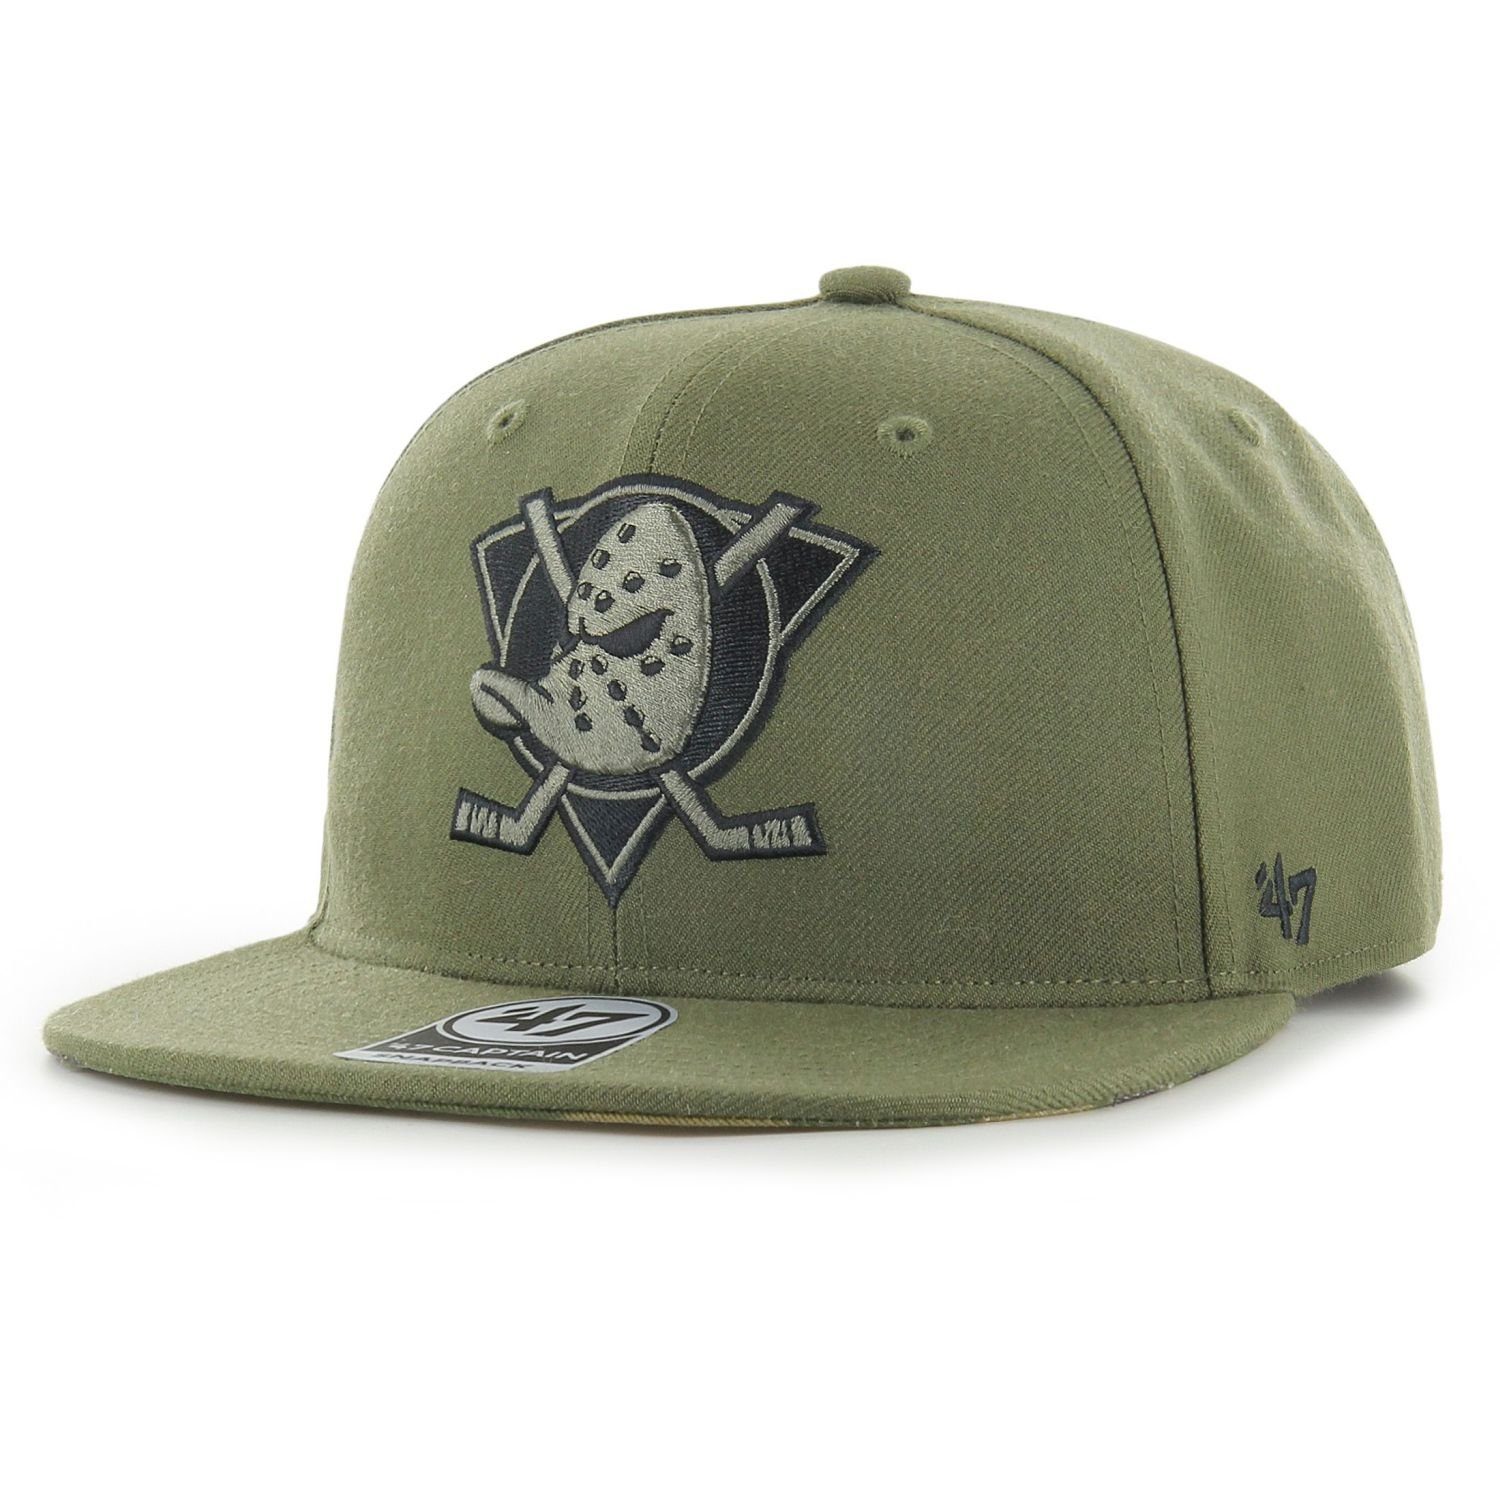 '47 Brand Snapback Cap CAPTAIN Anaheim Ducks